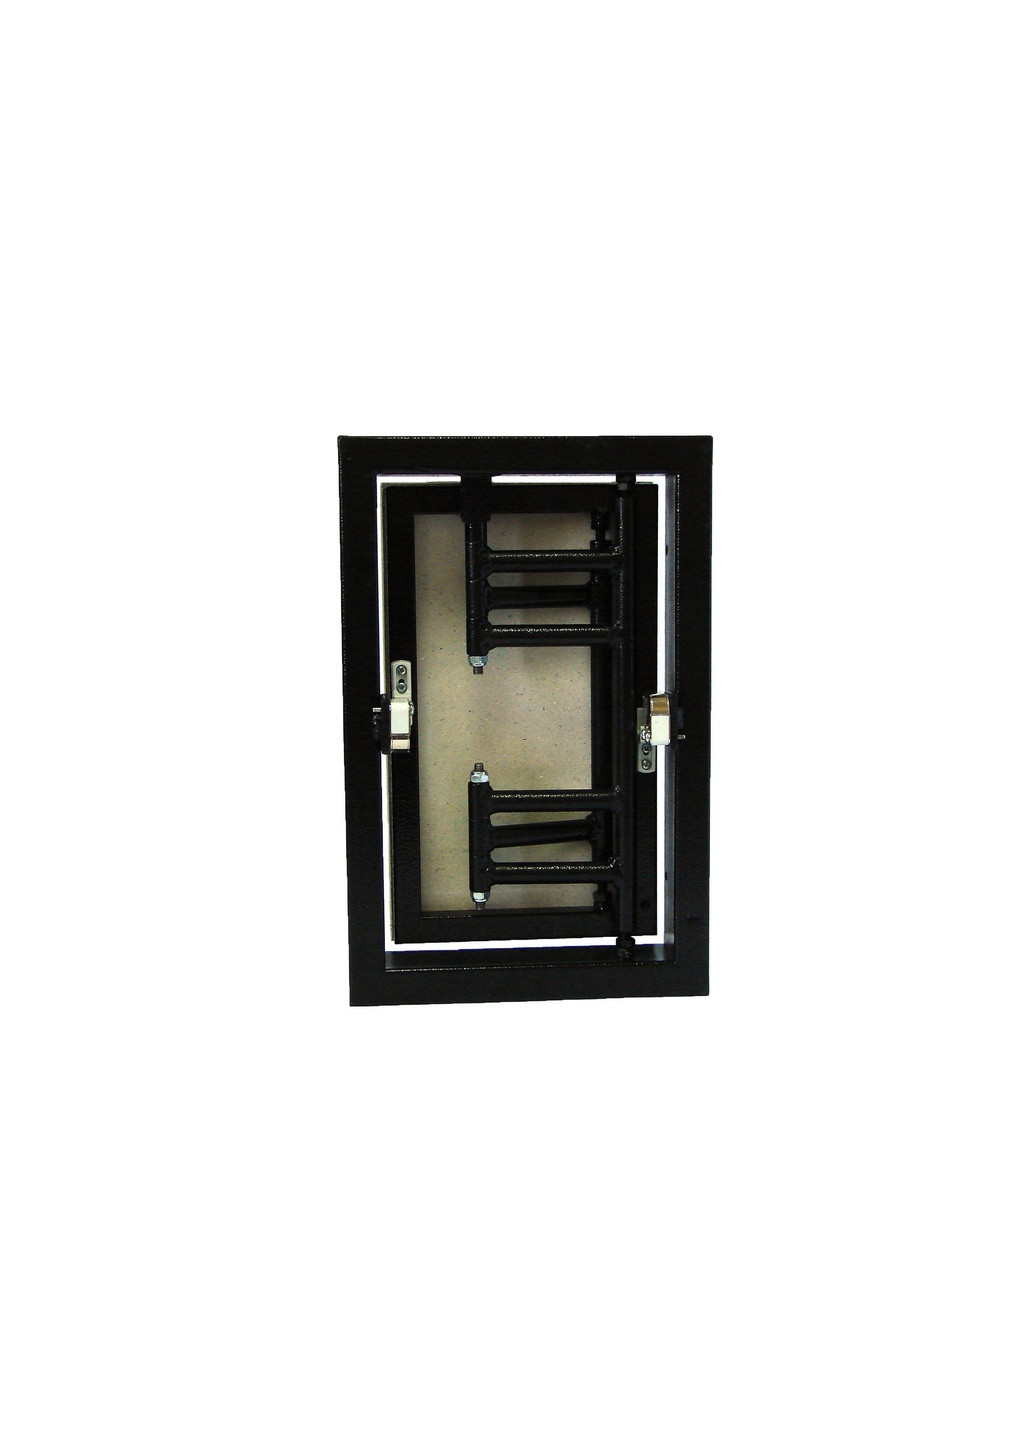 Ревизионный люк скрытого монтажа под плитку нажимного типа 250x450 ревизионная дверца для плитки (1119) S-Dom (264208750)